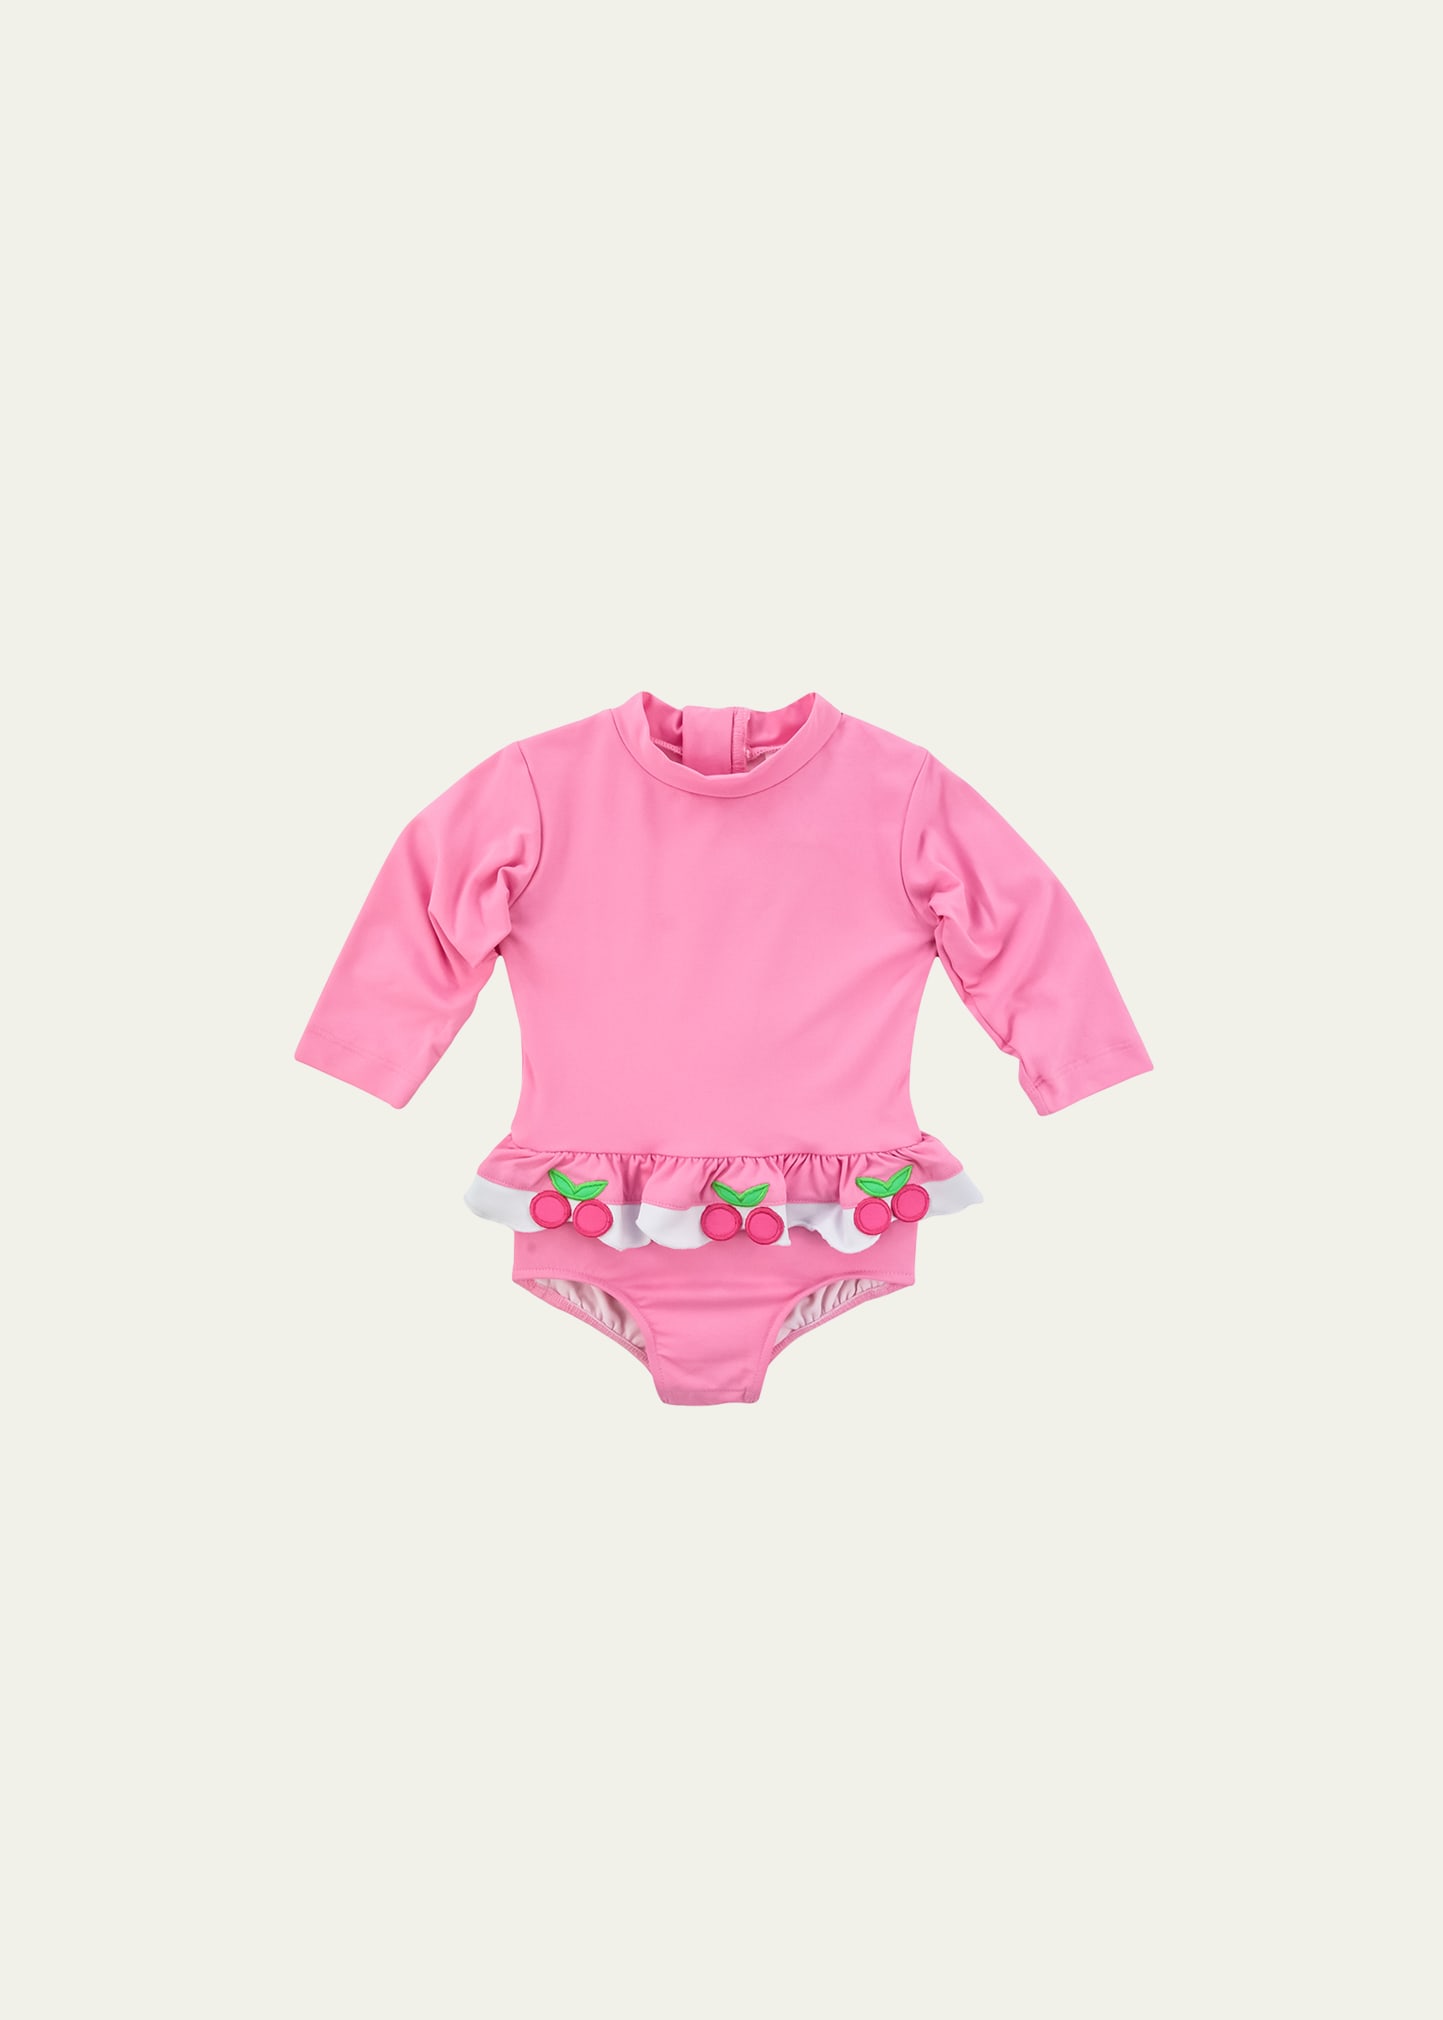 Florence Eiseman Kids' Girl's Embroidered Cherries Rashguard In Pink